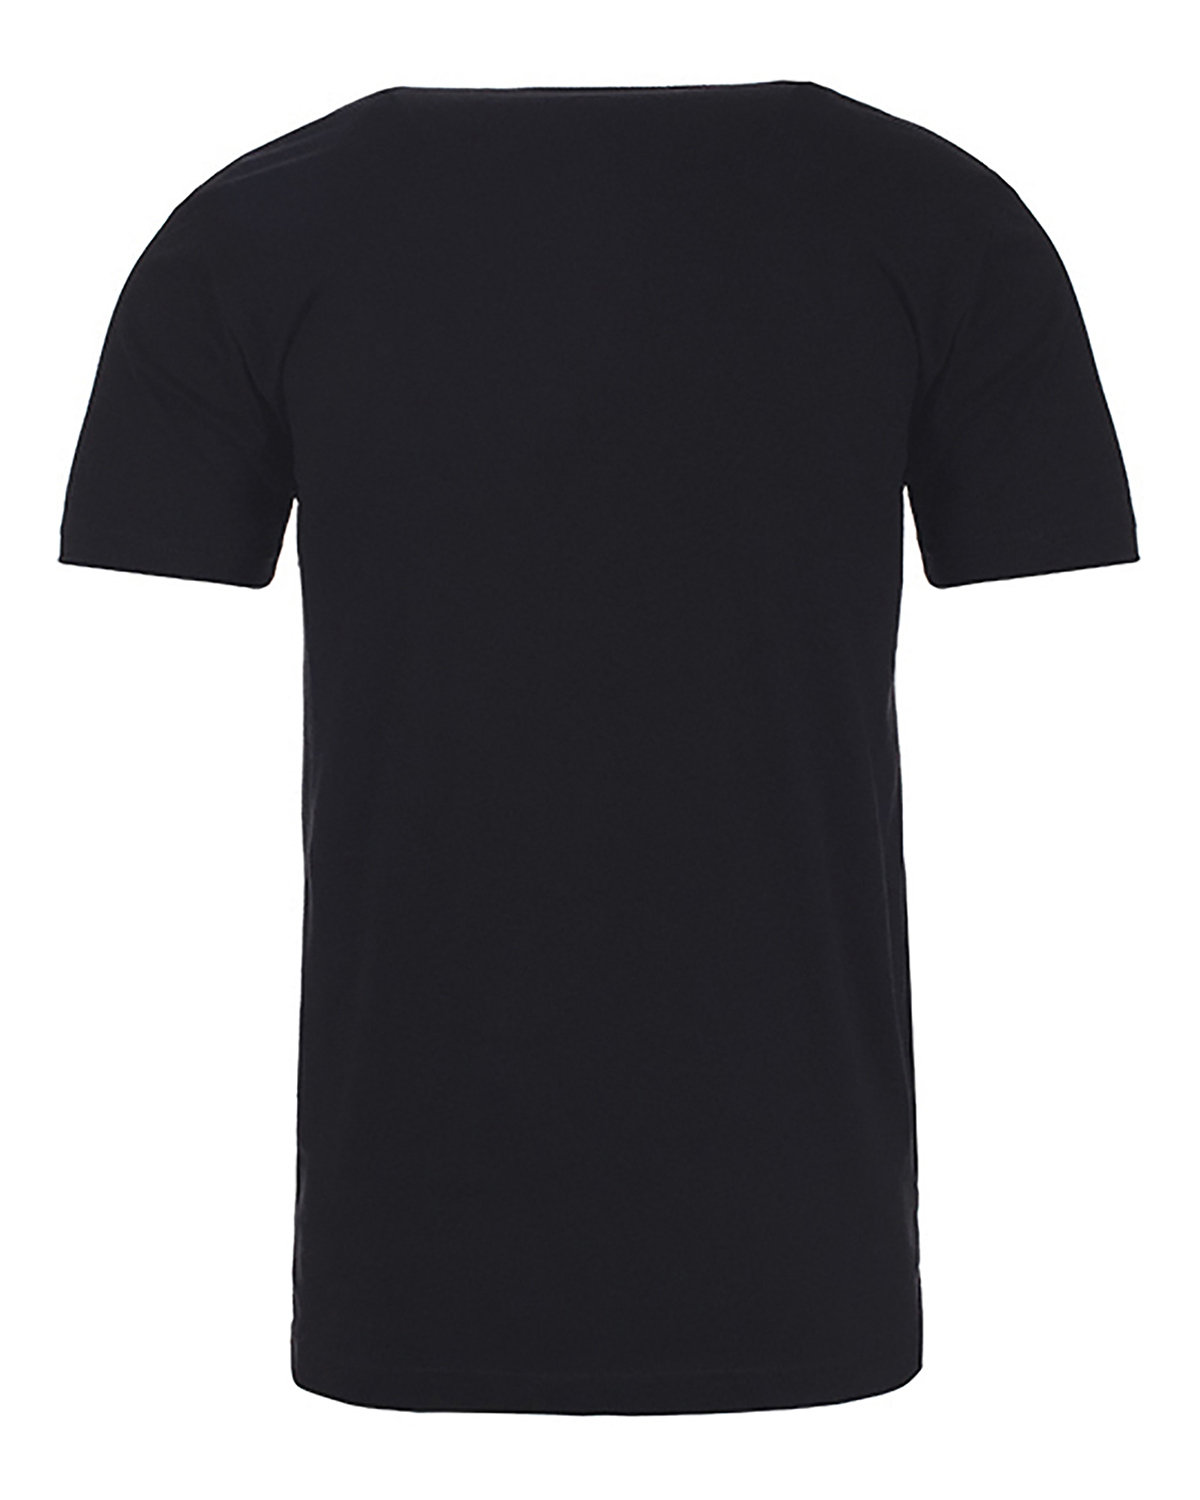 Next Level 3600 Unisex Cotton T Shirt - Heather Gray - 6XL